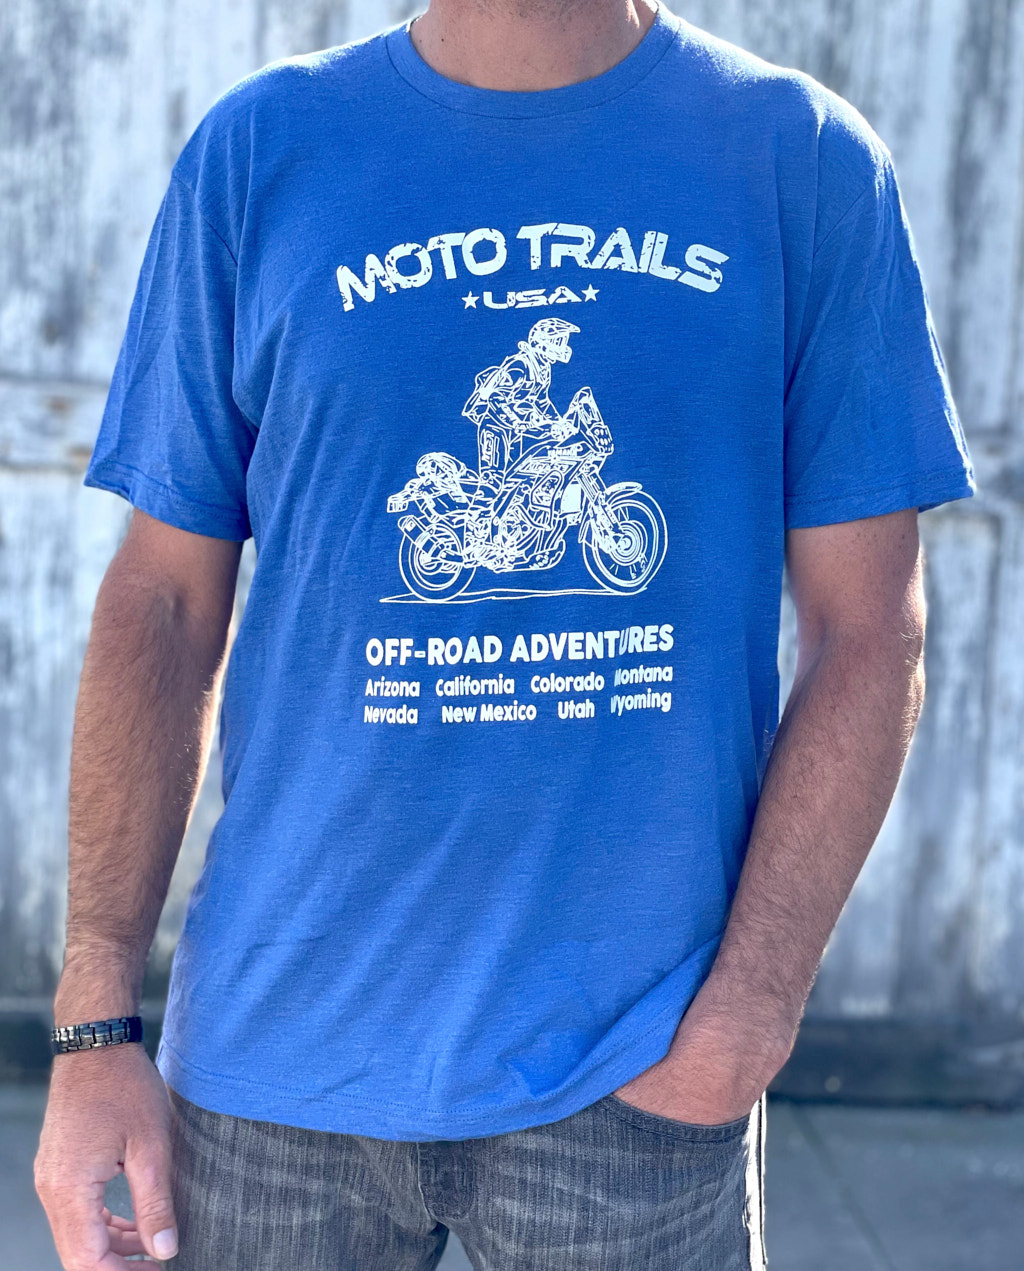 Black T-shirt Moto Trails USA Tenere 700